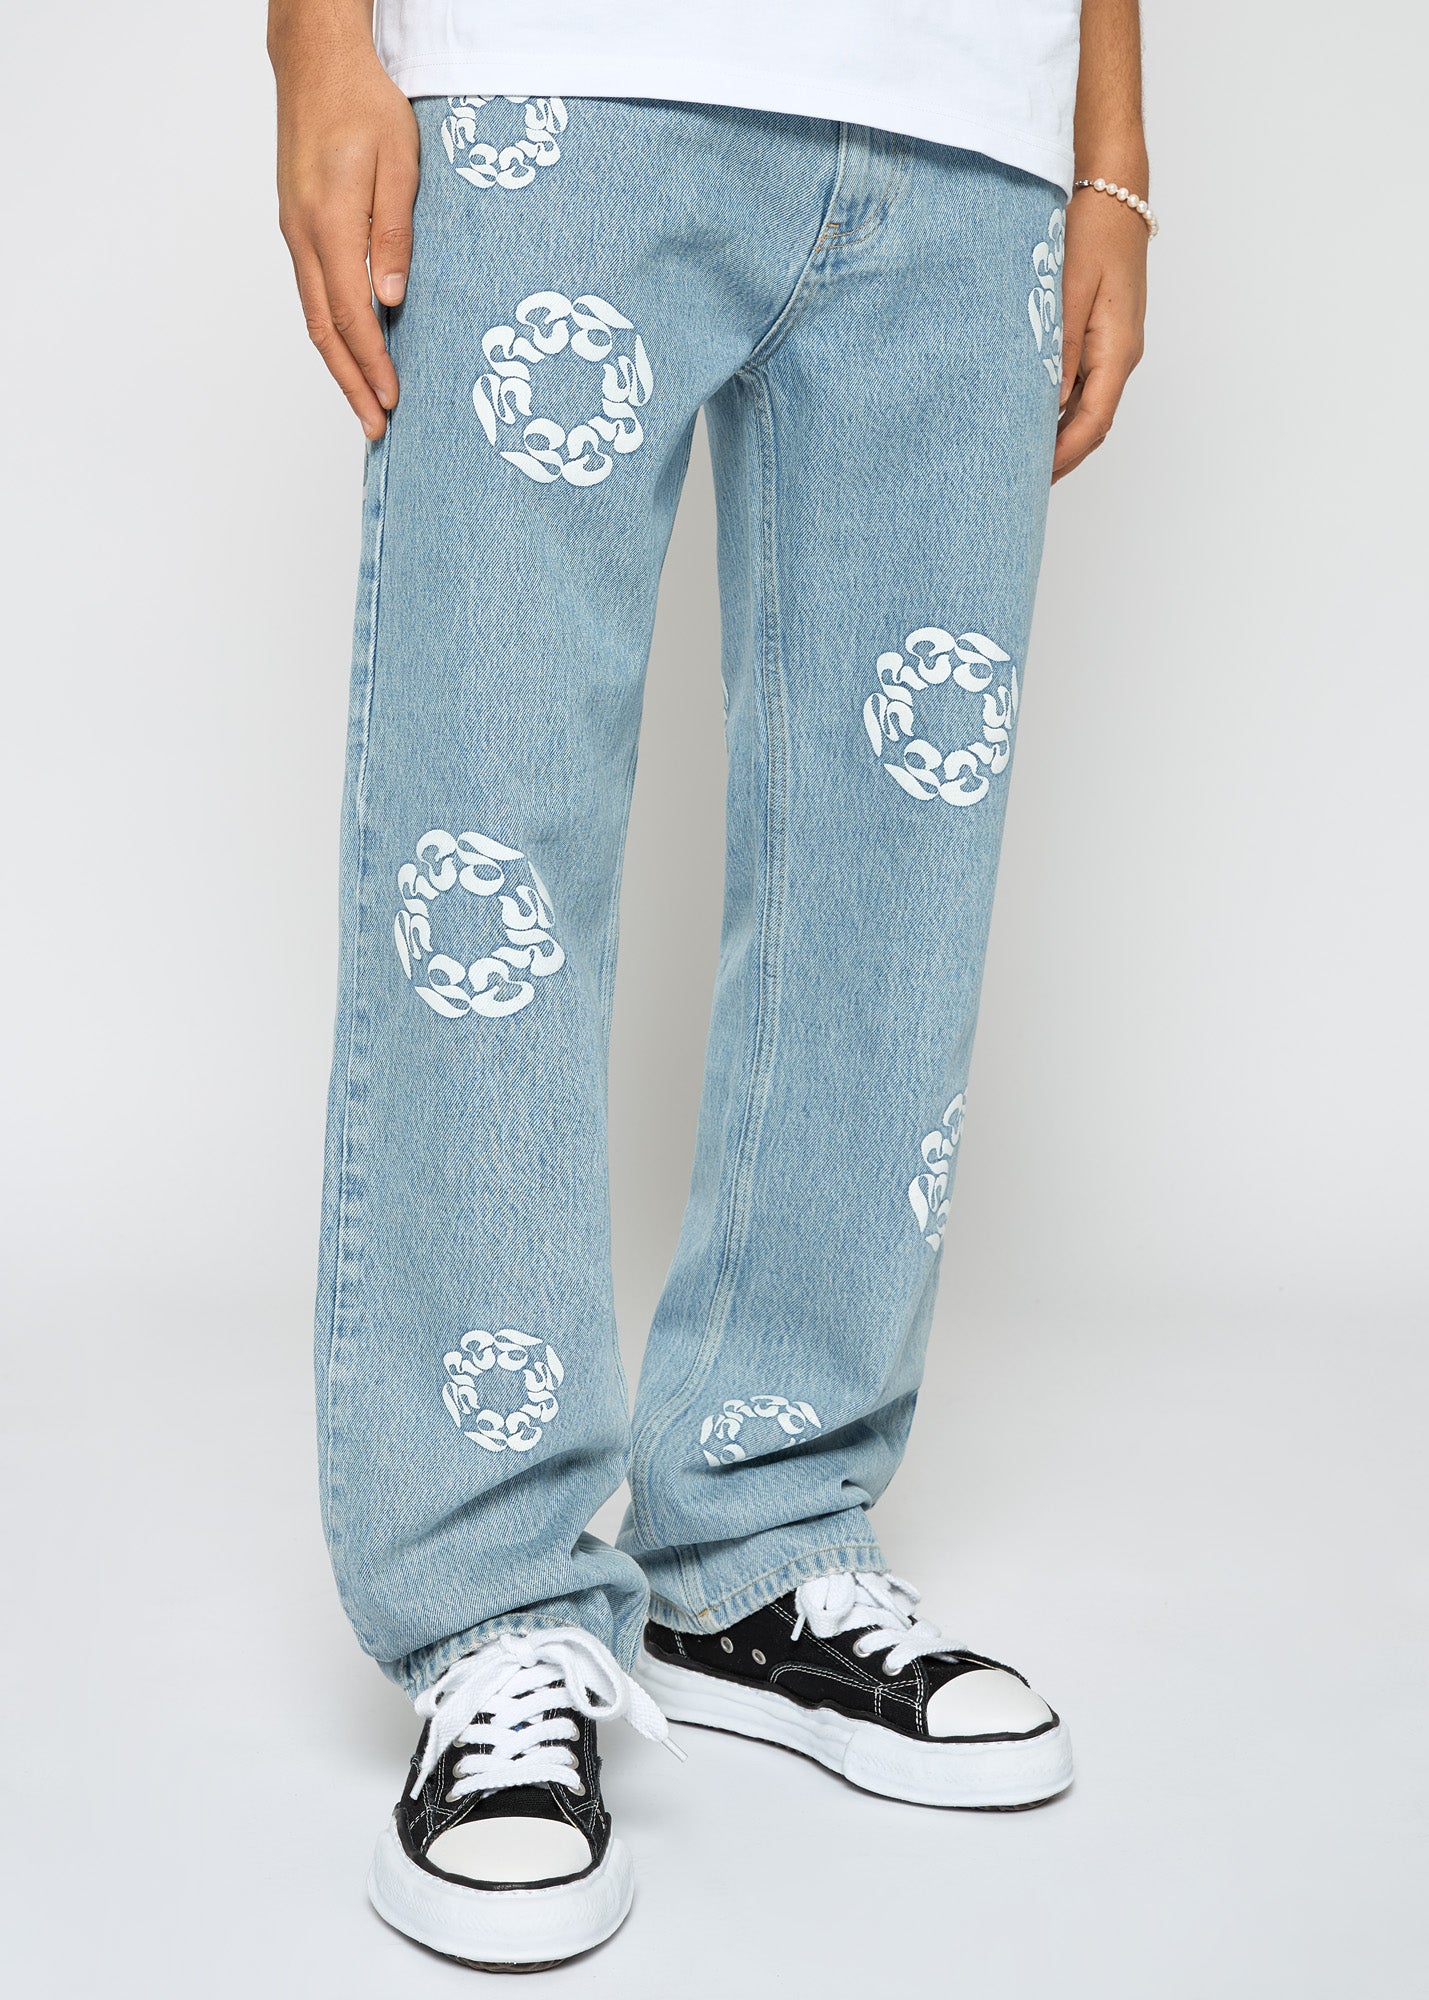 Circle Jeans